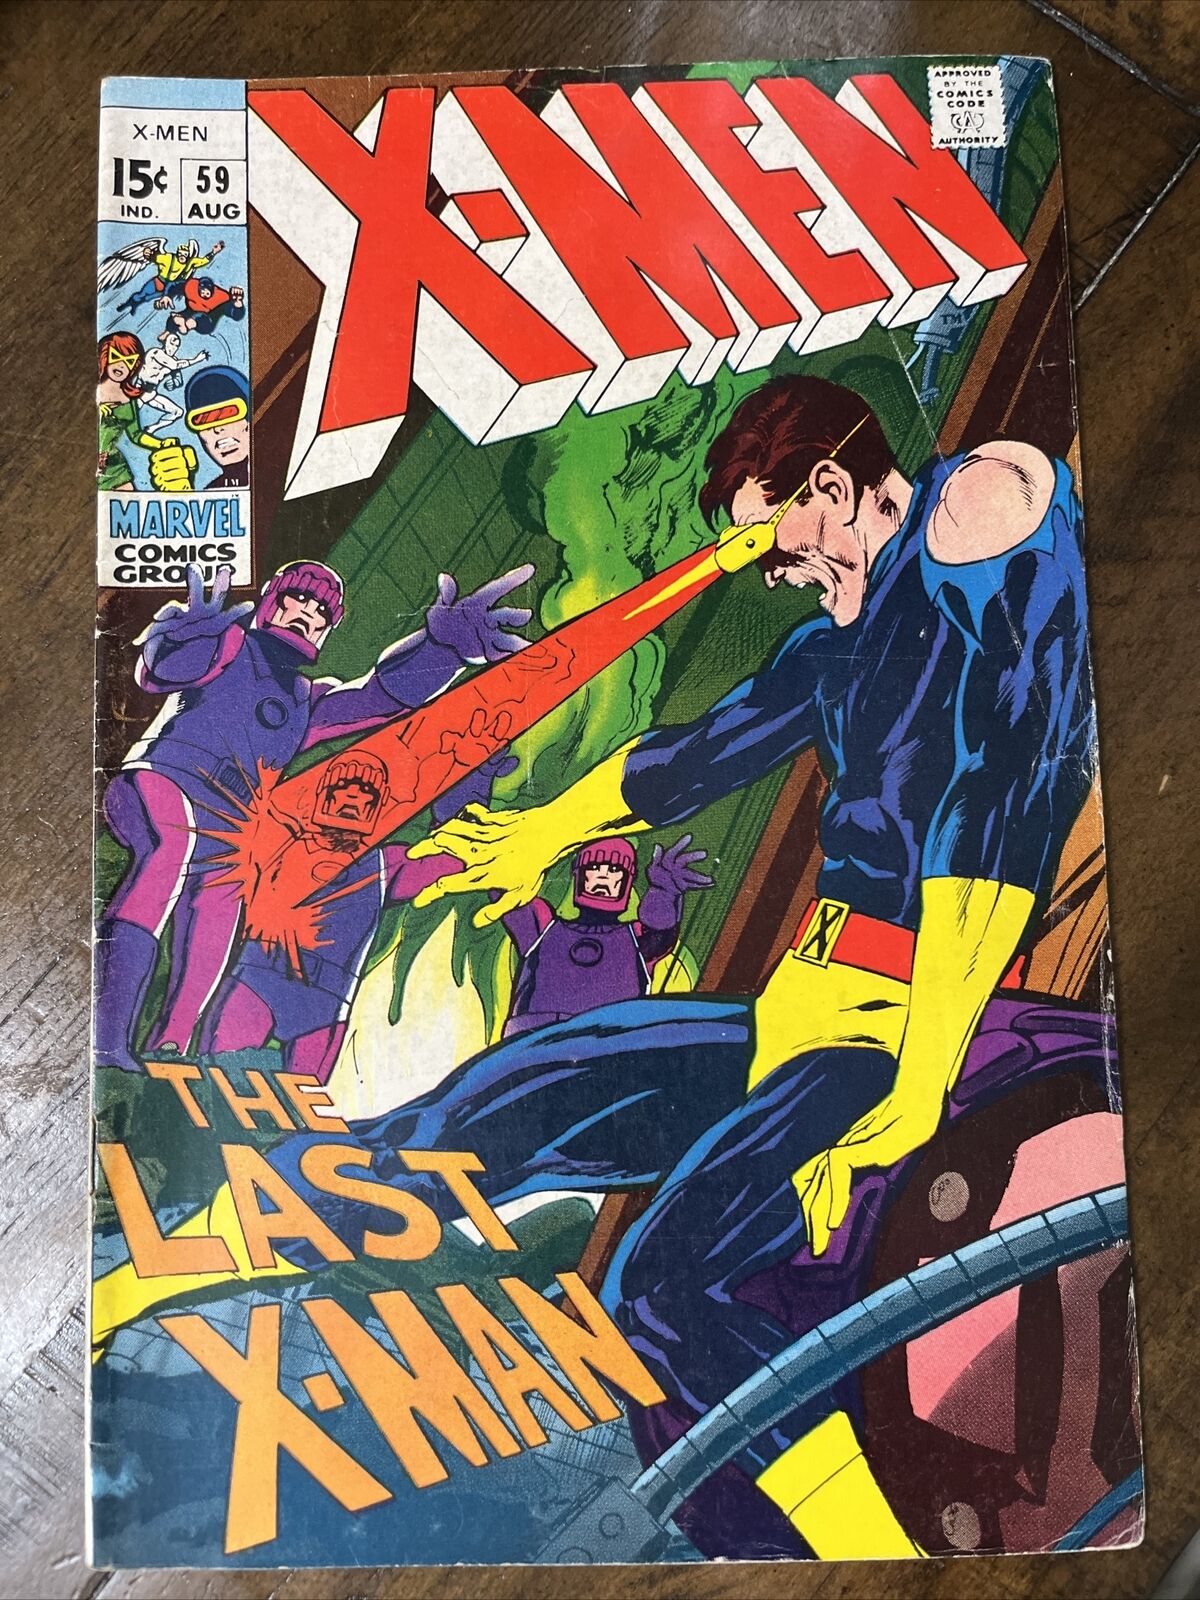 Vintage X-Men The Last X-Man #59 (1969 Marvel Comics)